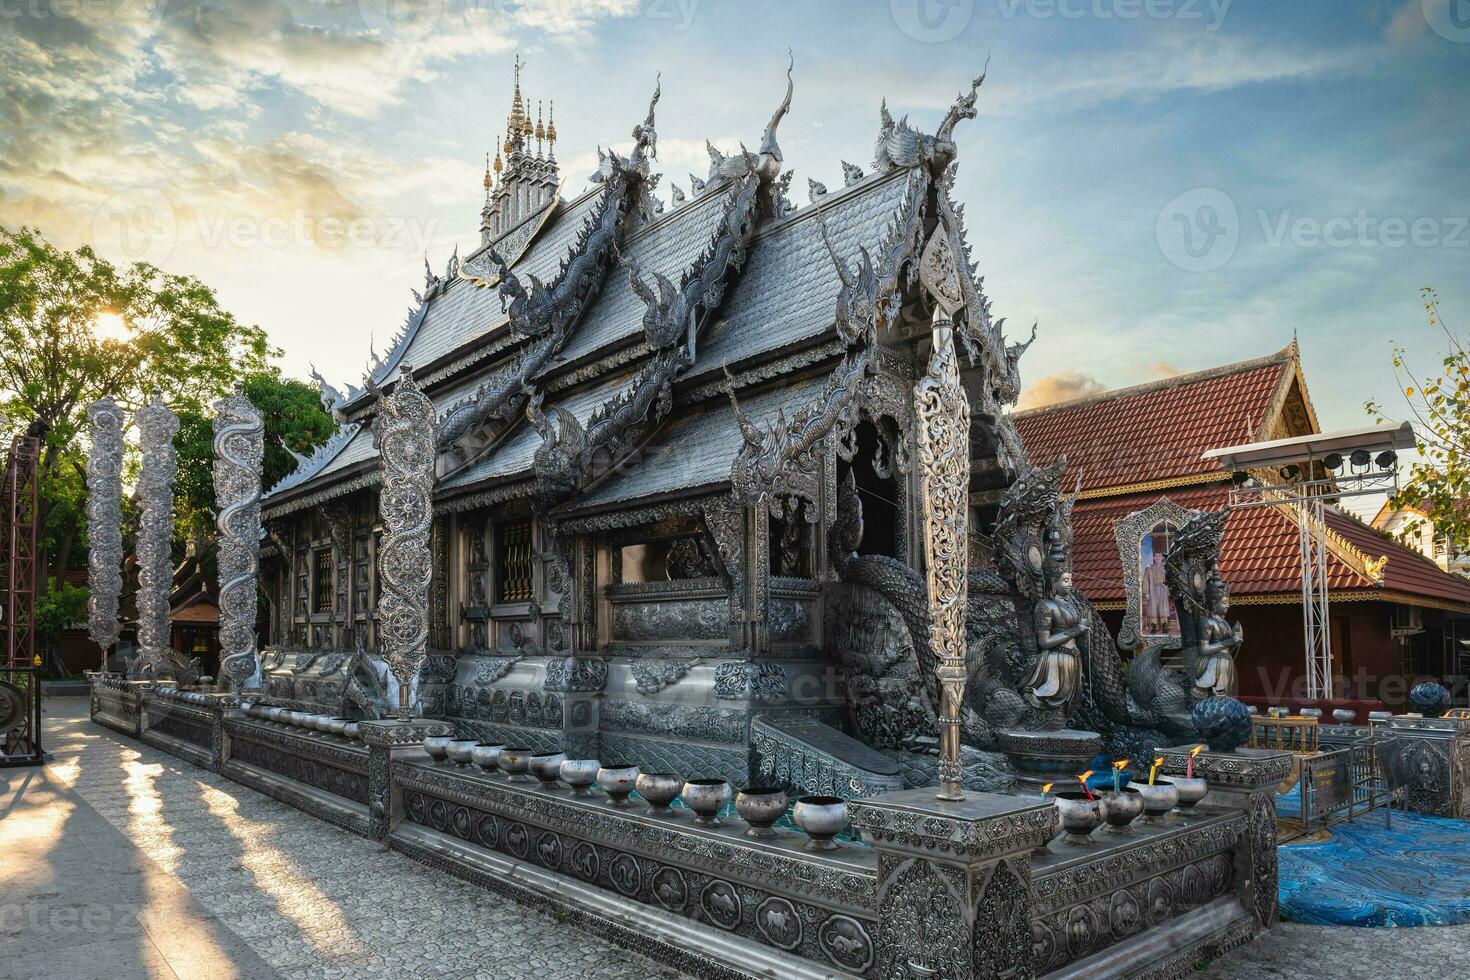 wat si suphan, oftewel zilver tempel, in Chiang mei, Thailand foto